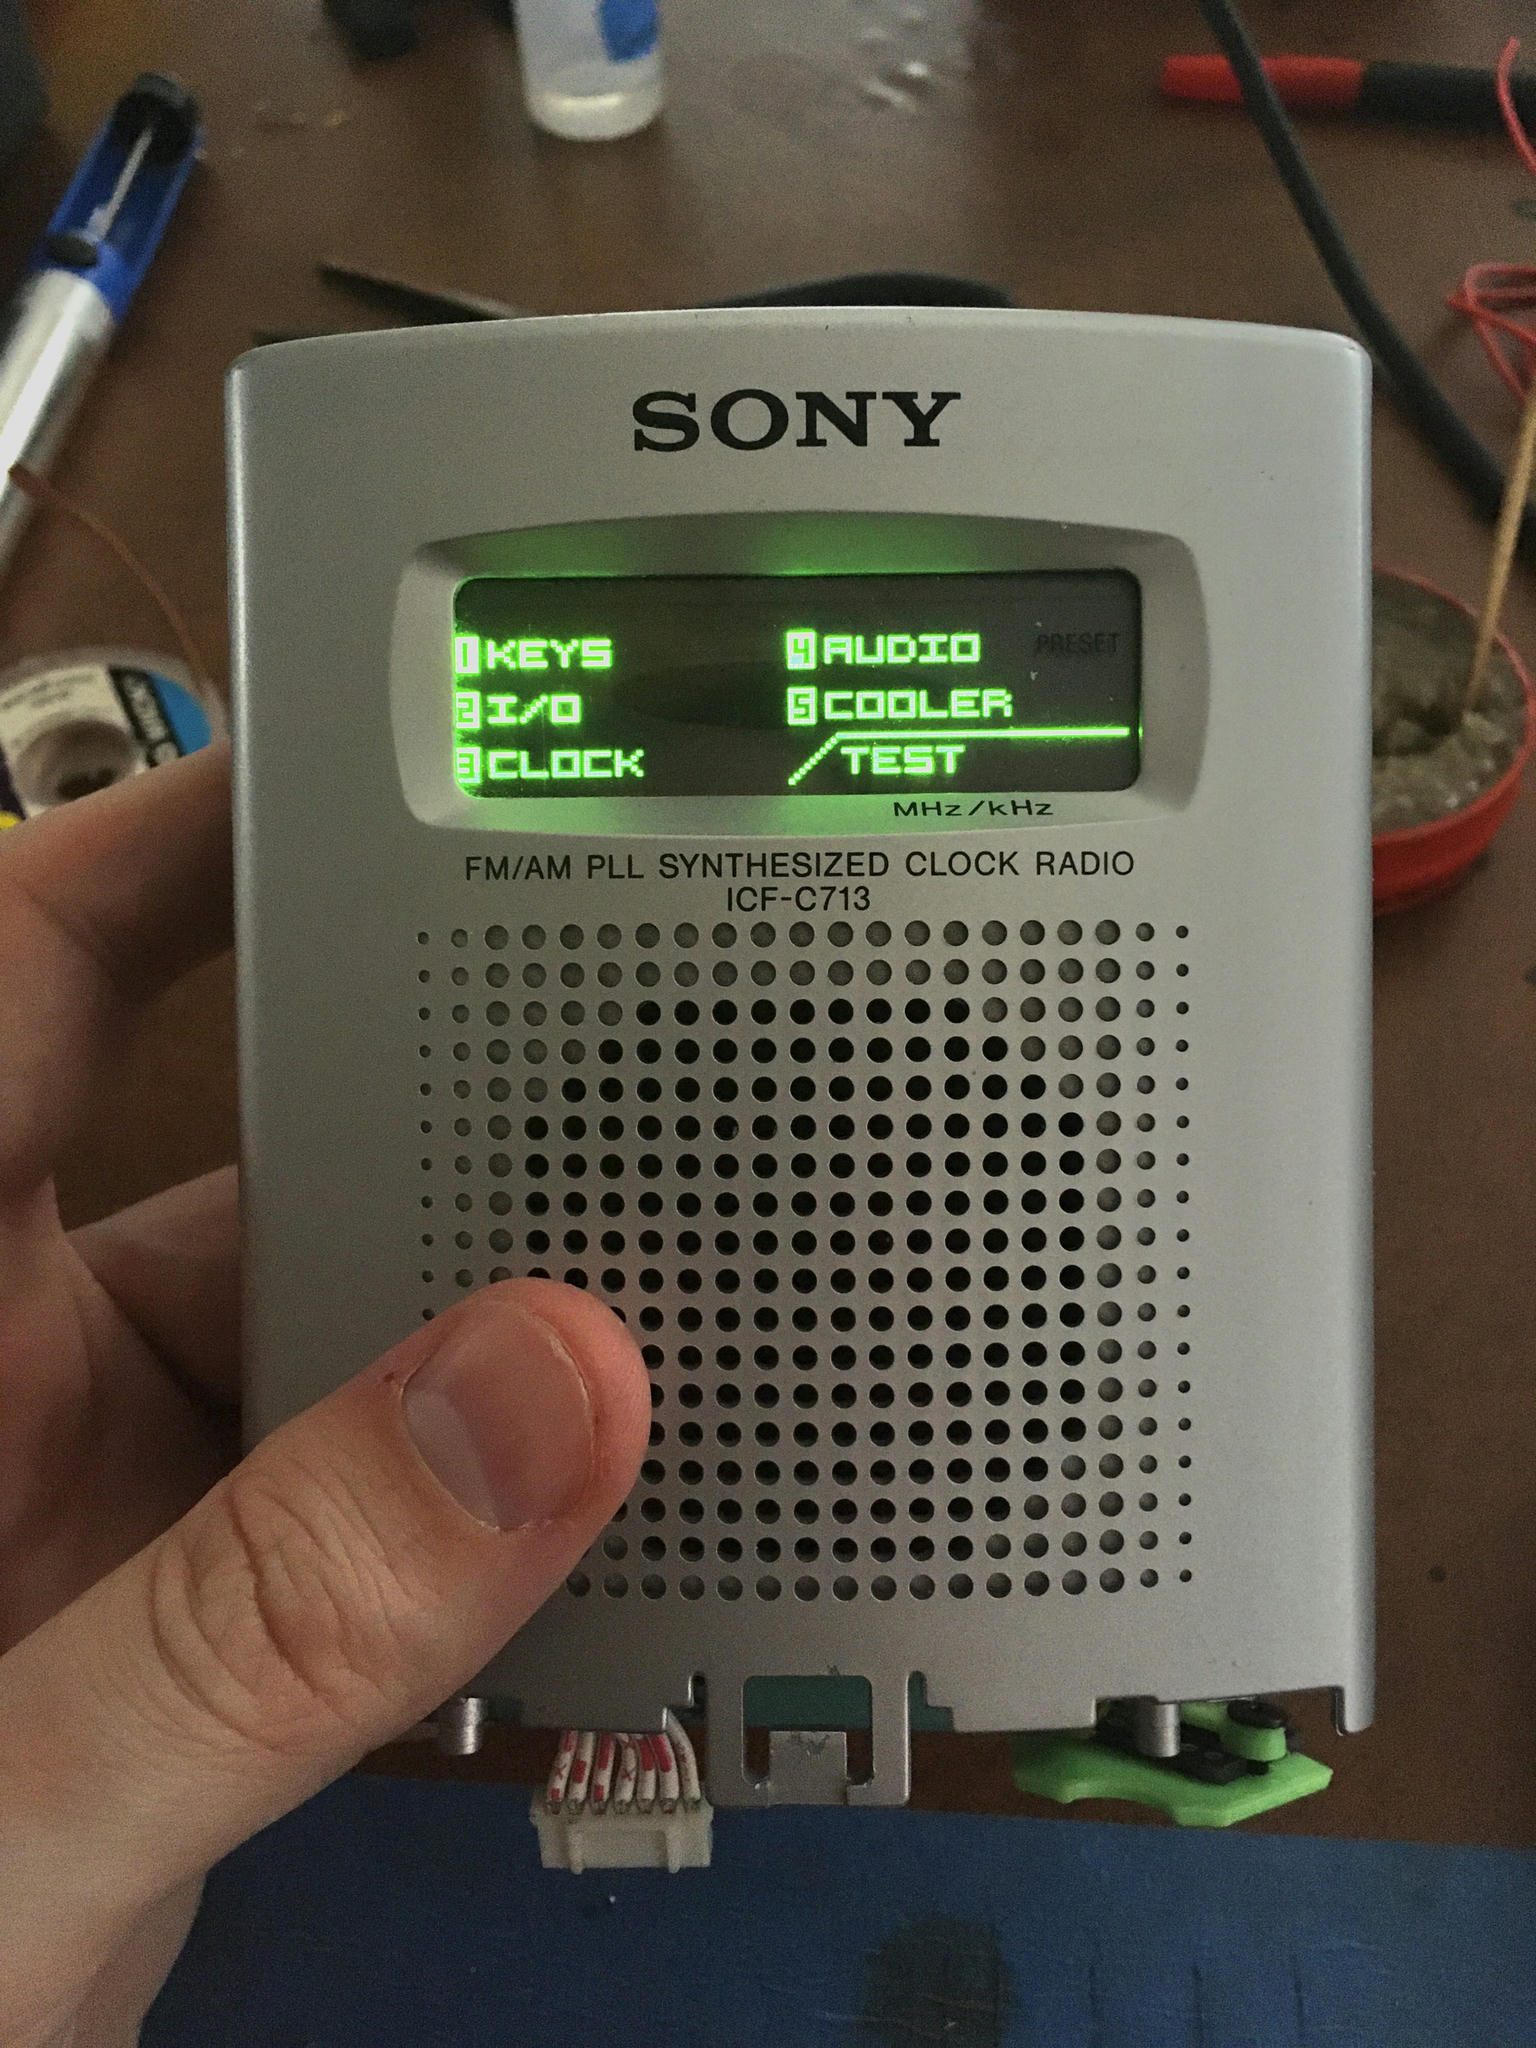 Clock radio front with menu displayed